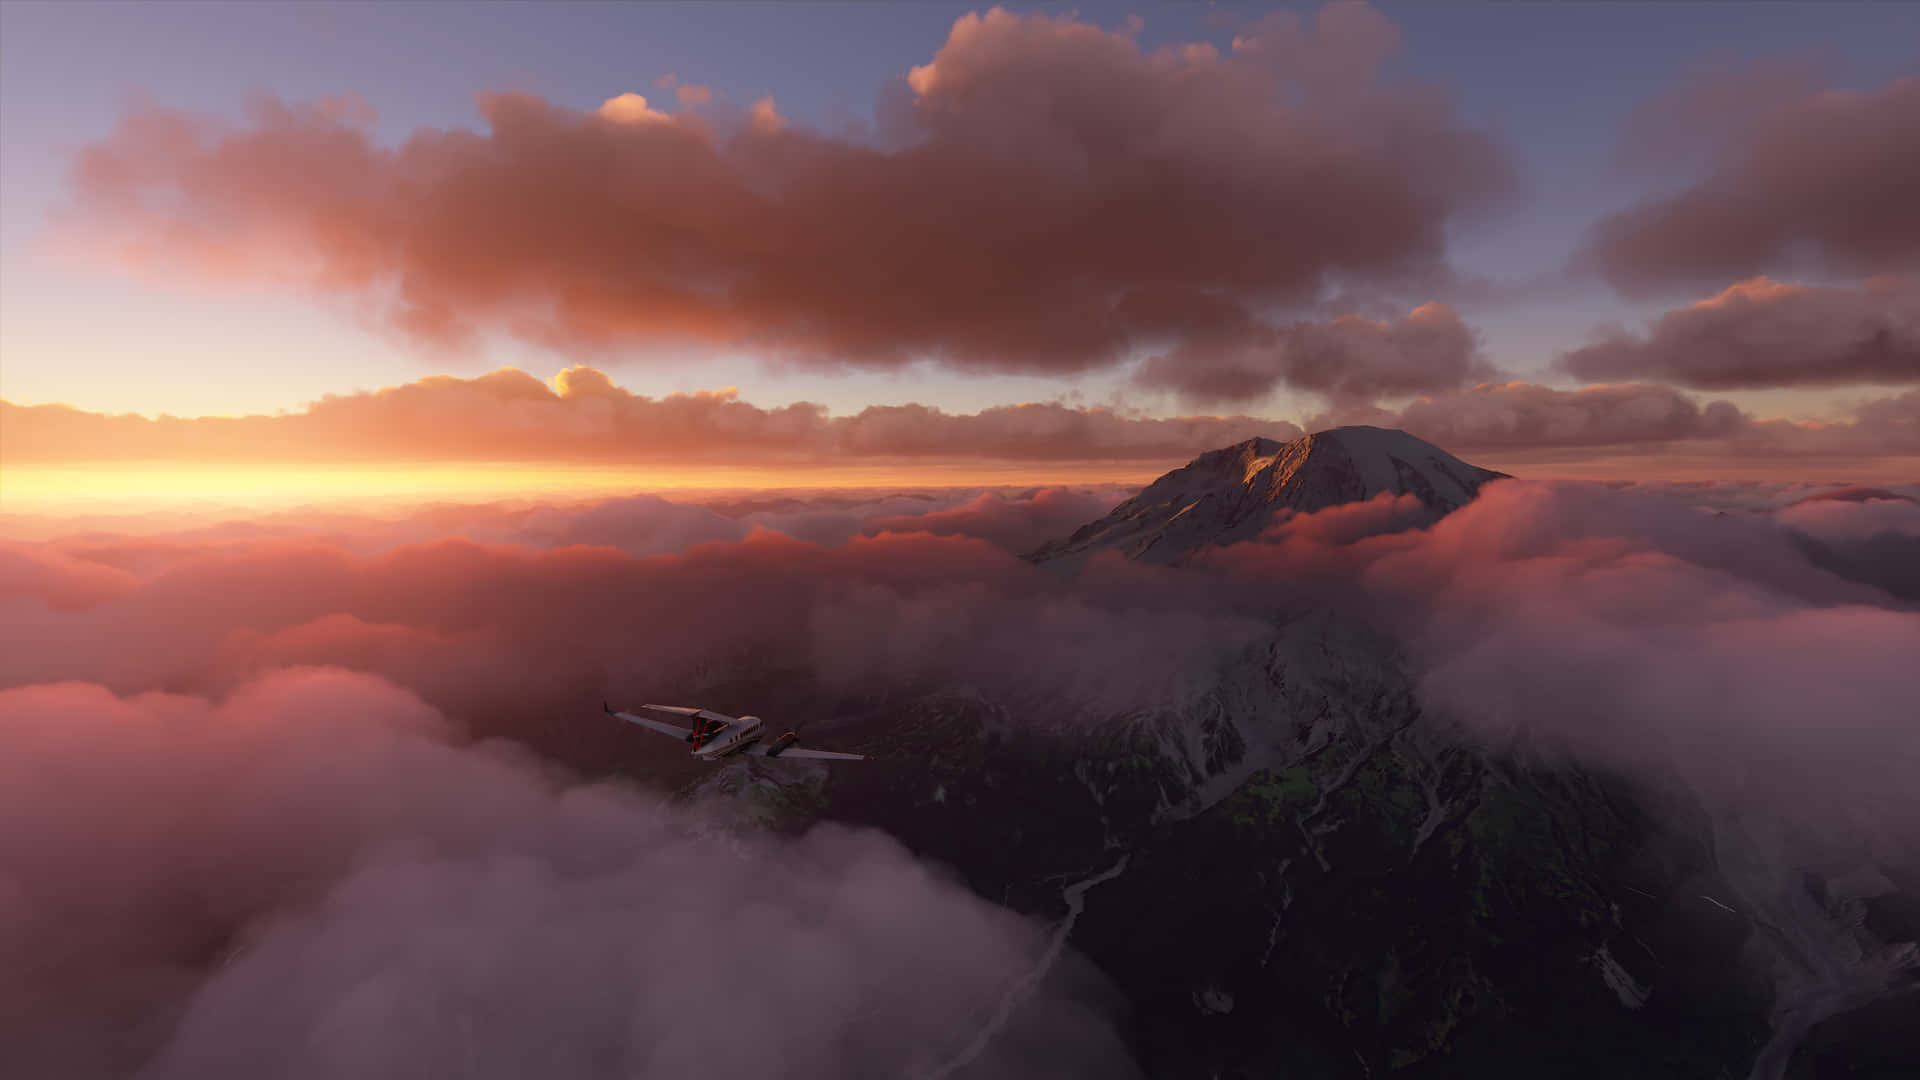 Soar High with Microsoft Flight Simulator